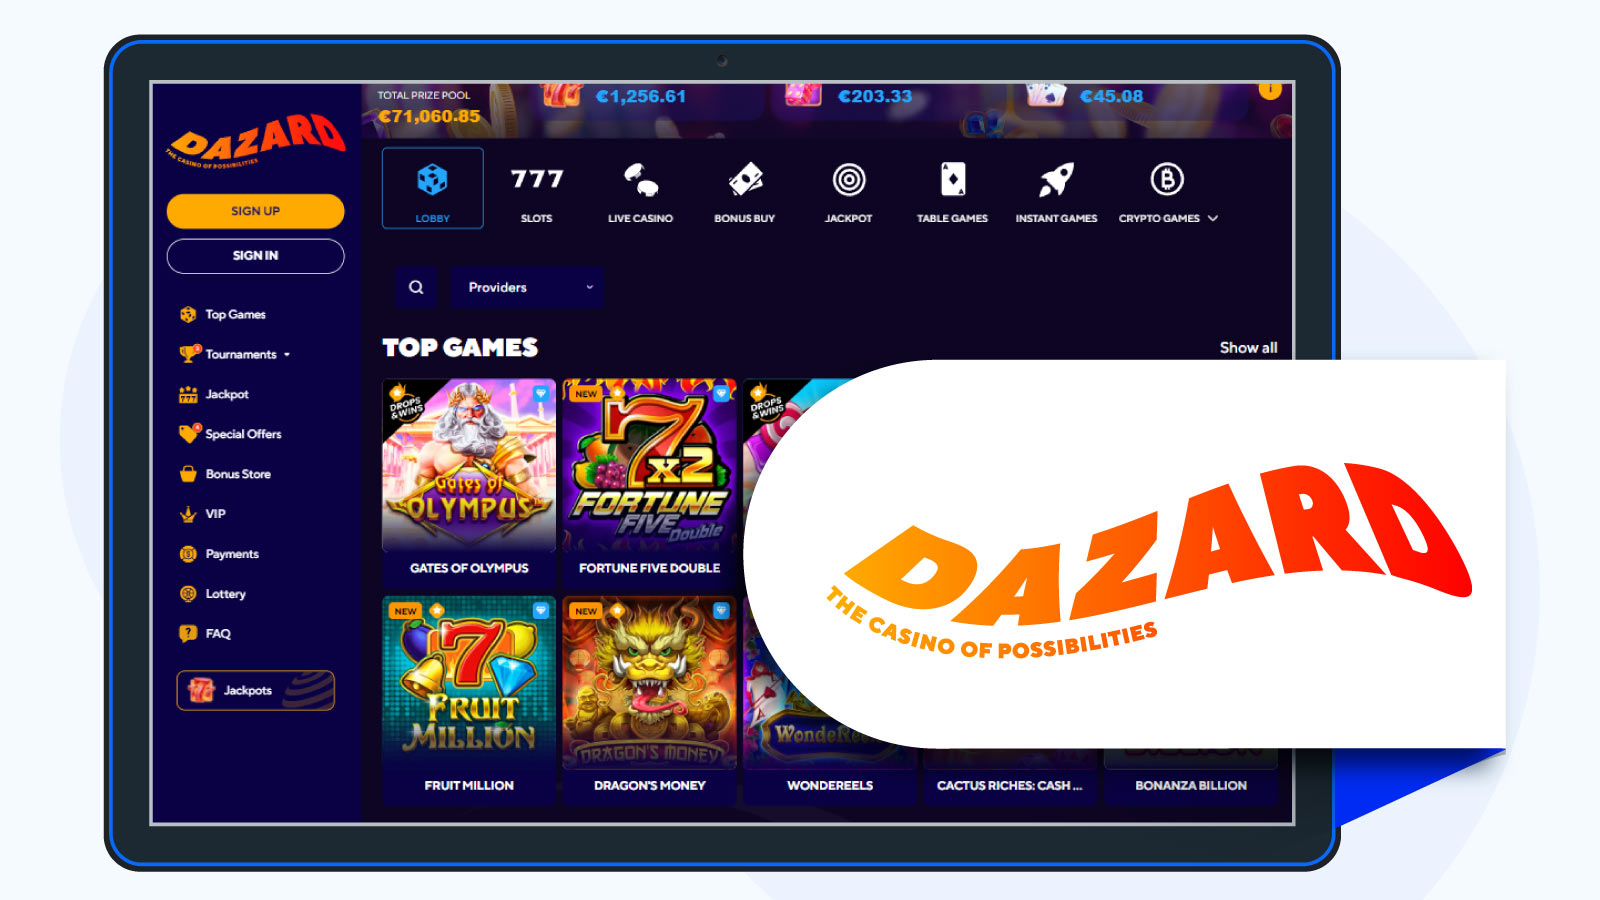 Dazard-Casino-Best-Mobile-Dama-NV-Casino